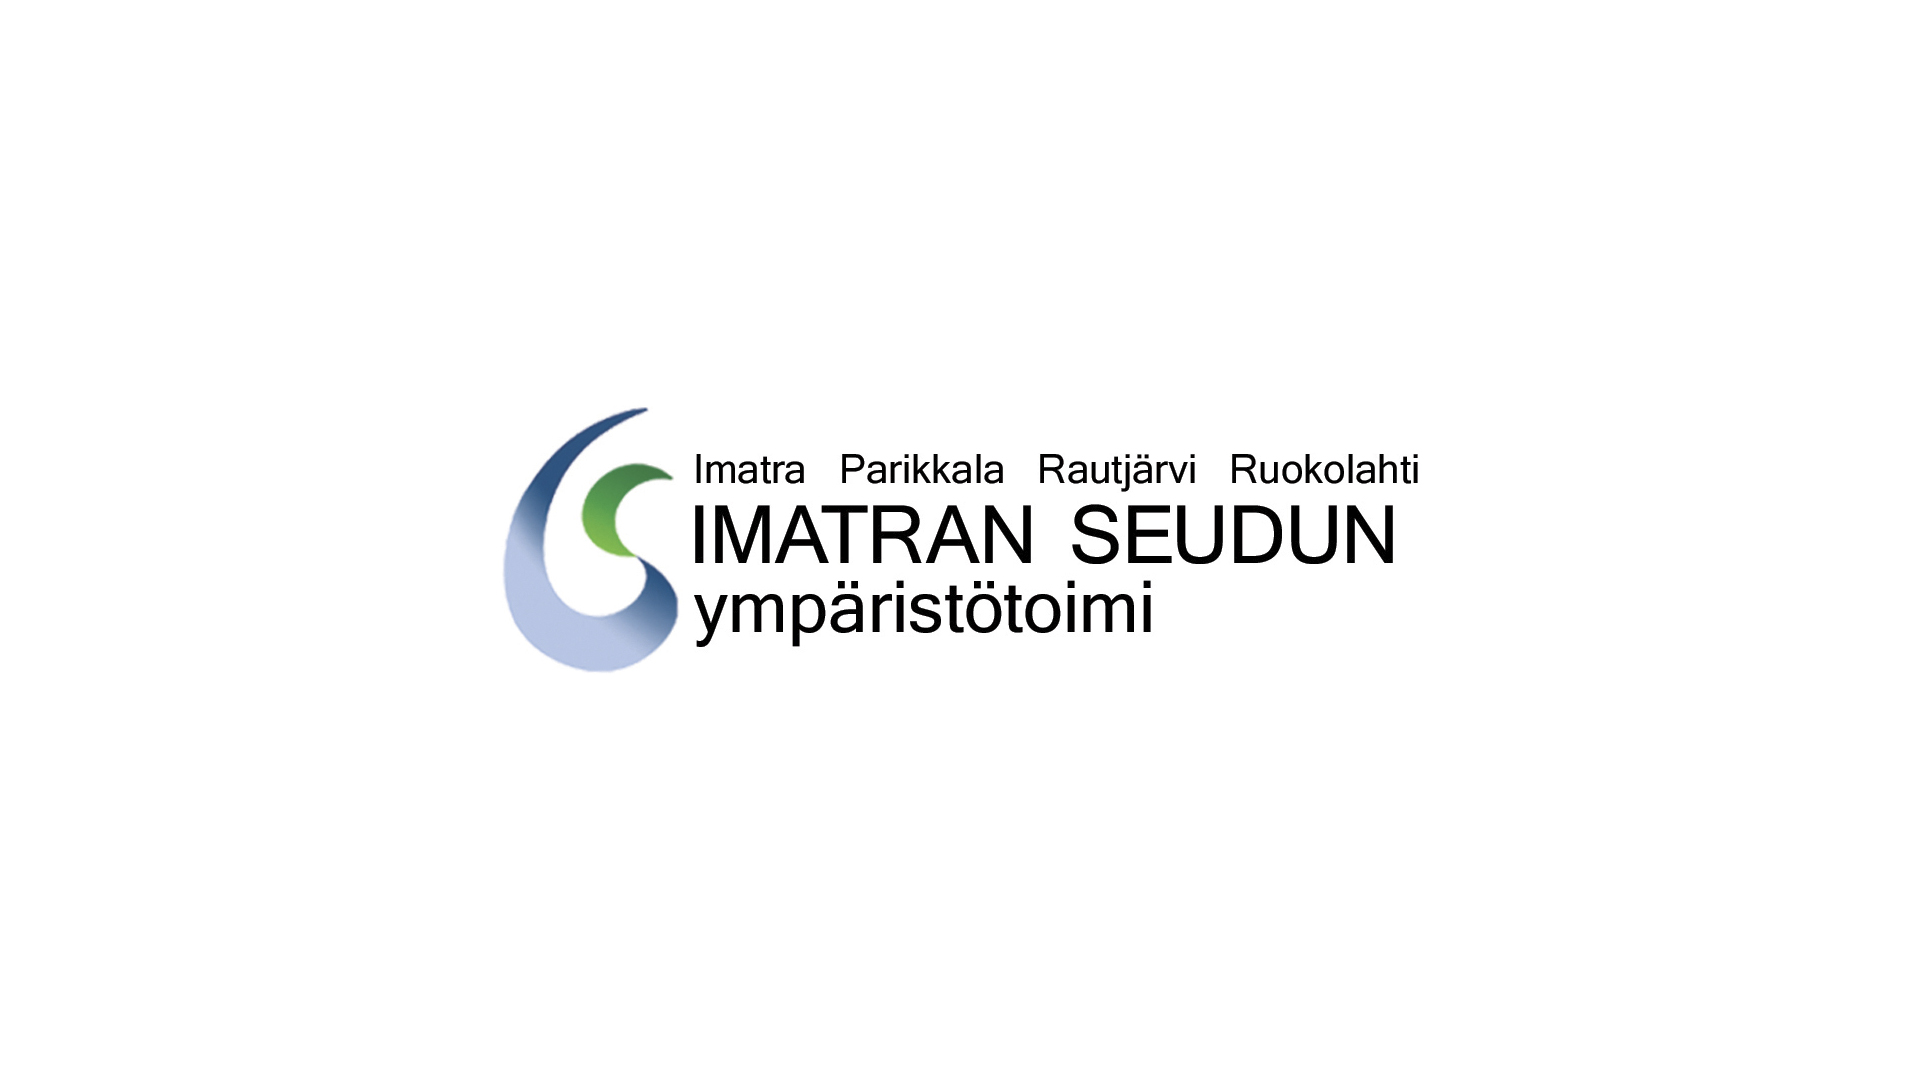 Imatran seudun ympäristötoimen logo